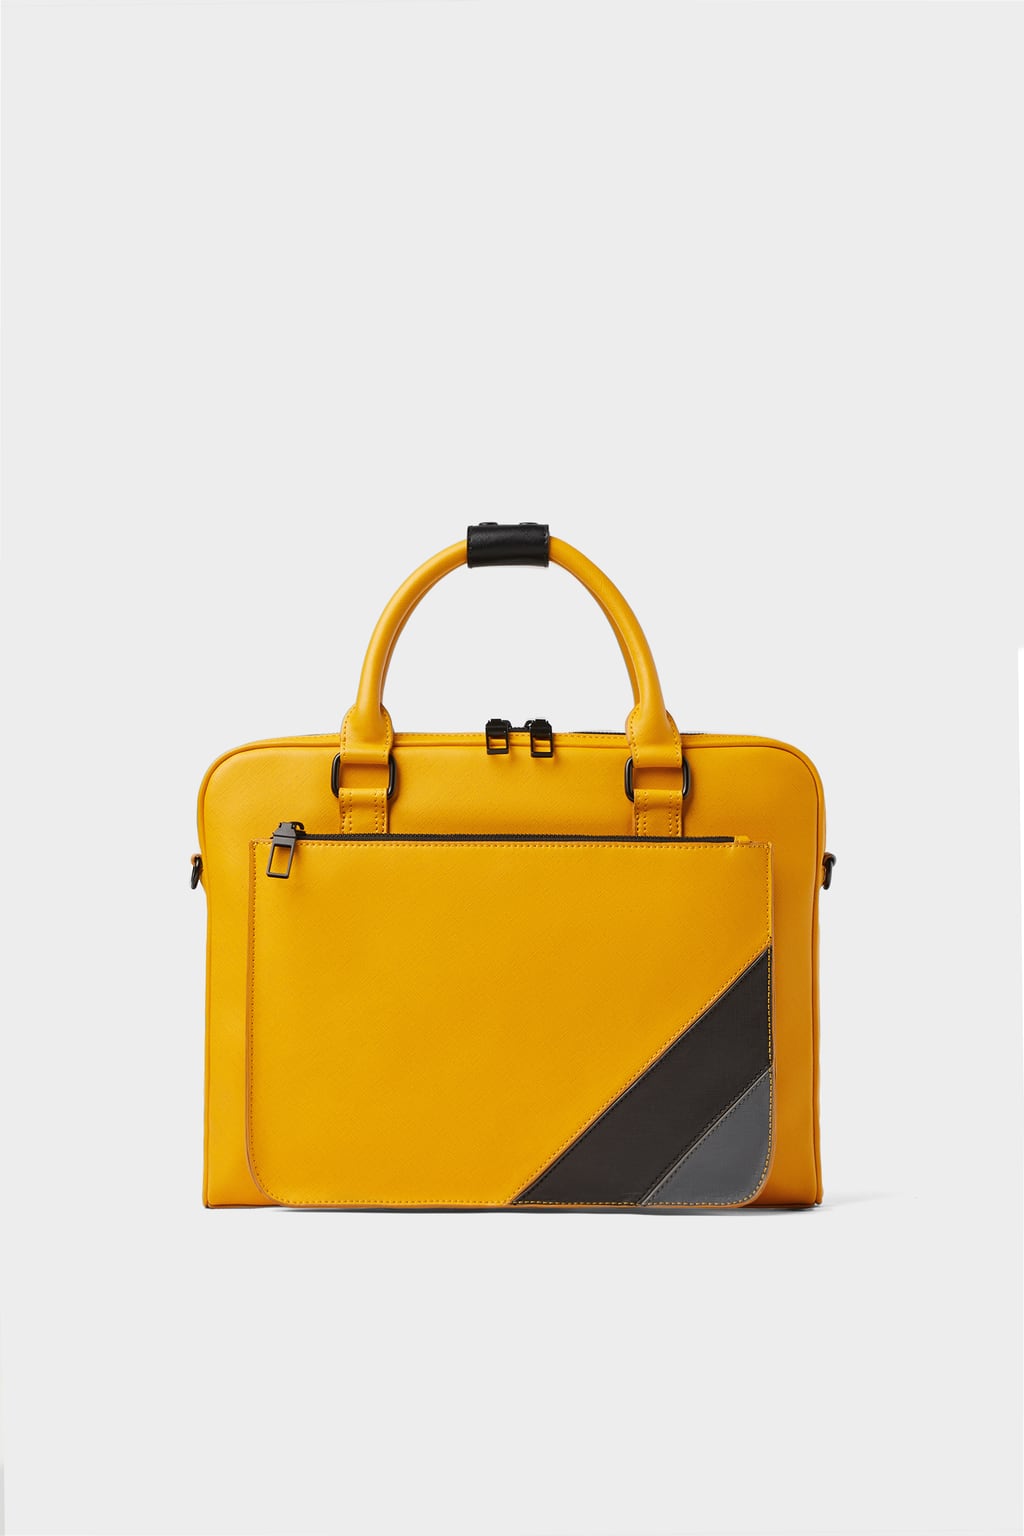 Zara Yellow Contrast Briefcase 